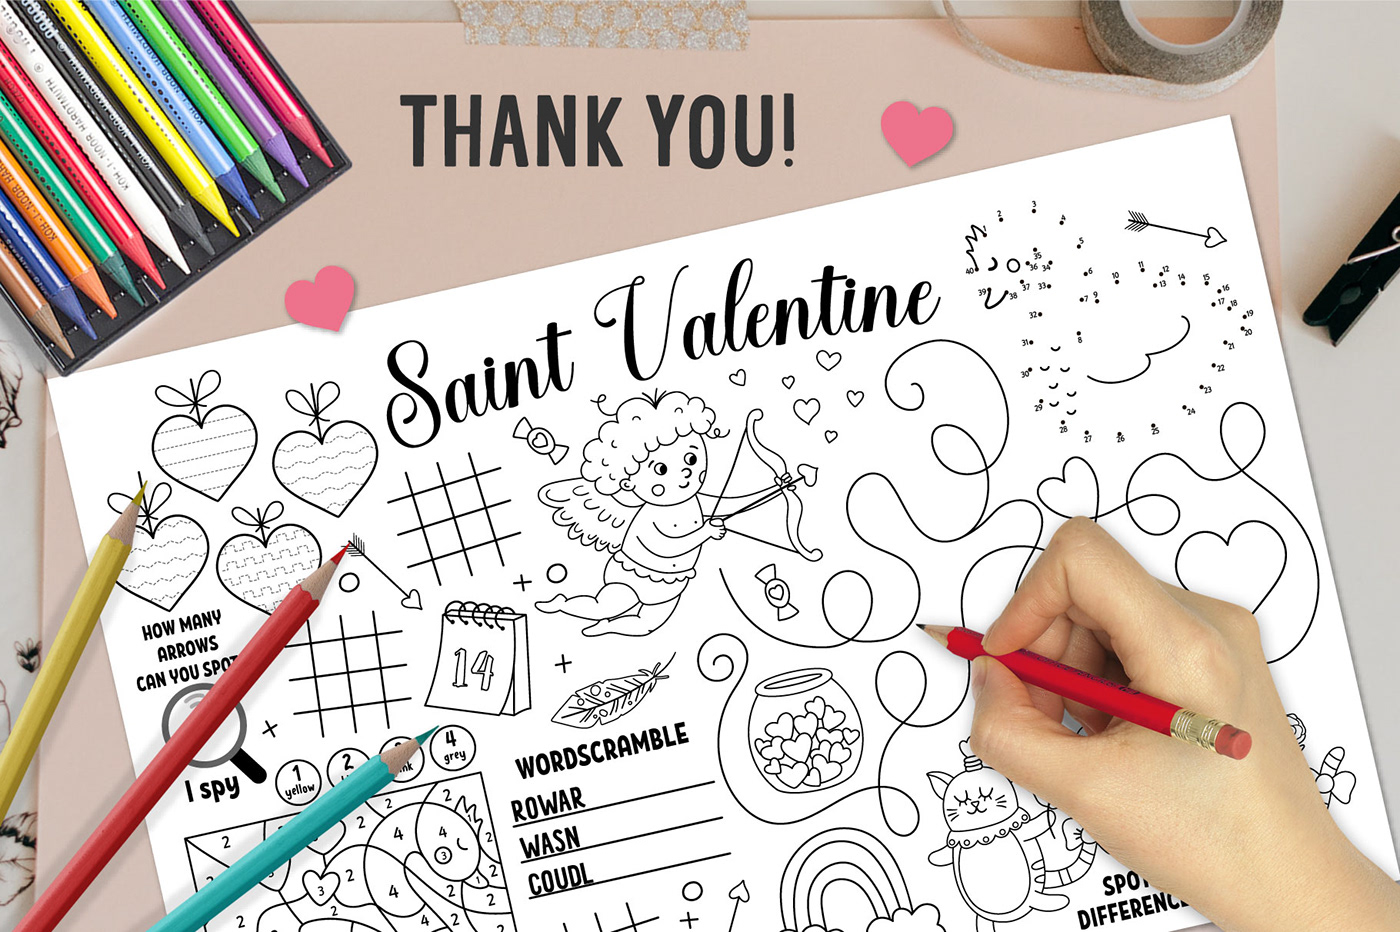 activity coloring page game kids mat placemat play saint saint valentine valentine